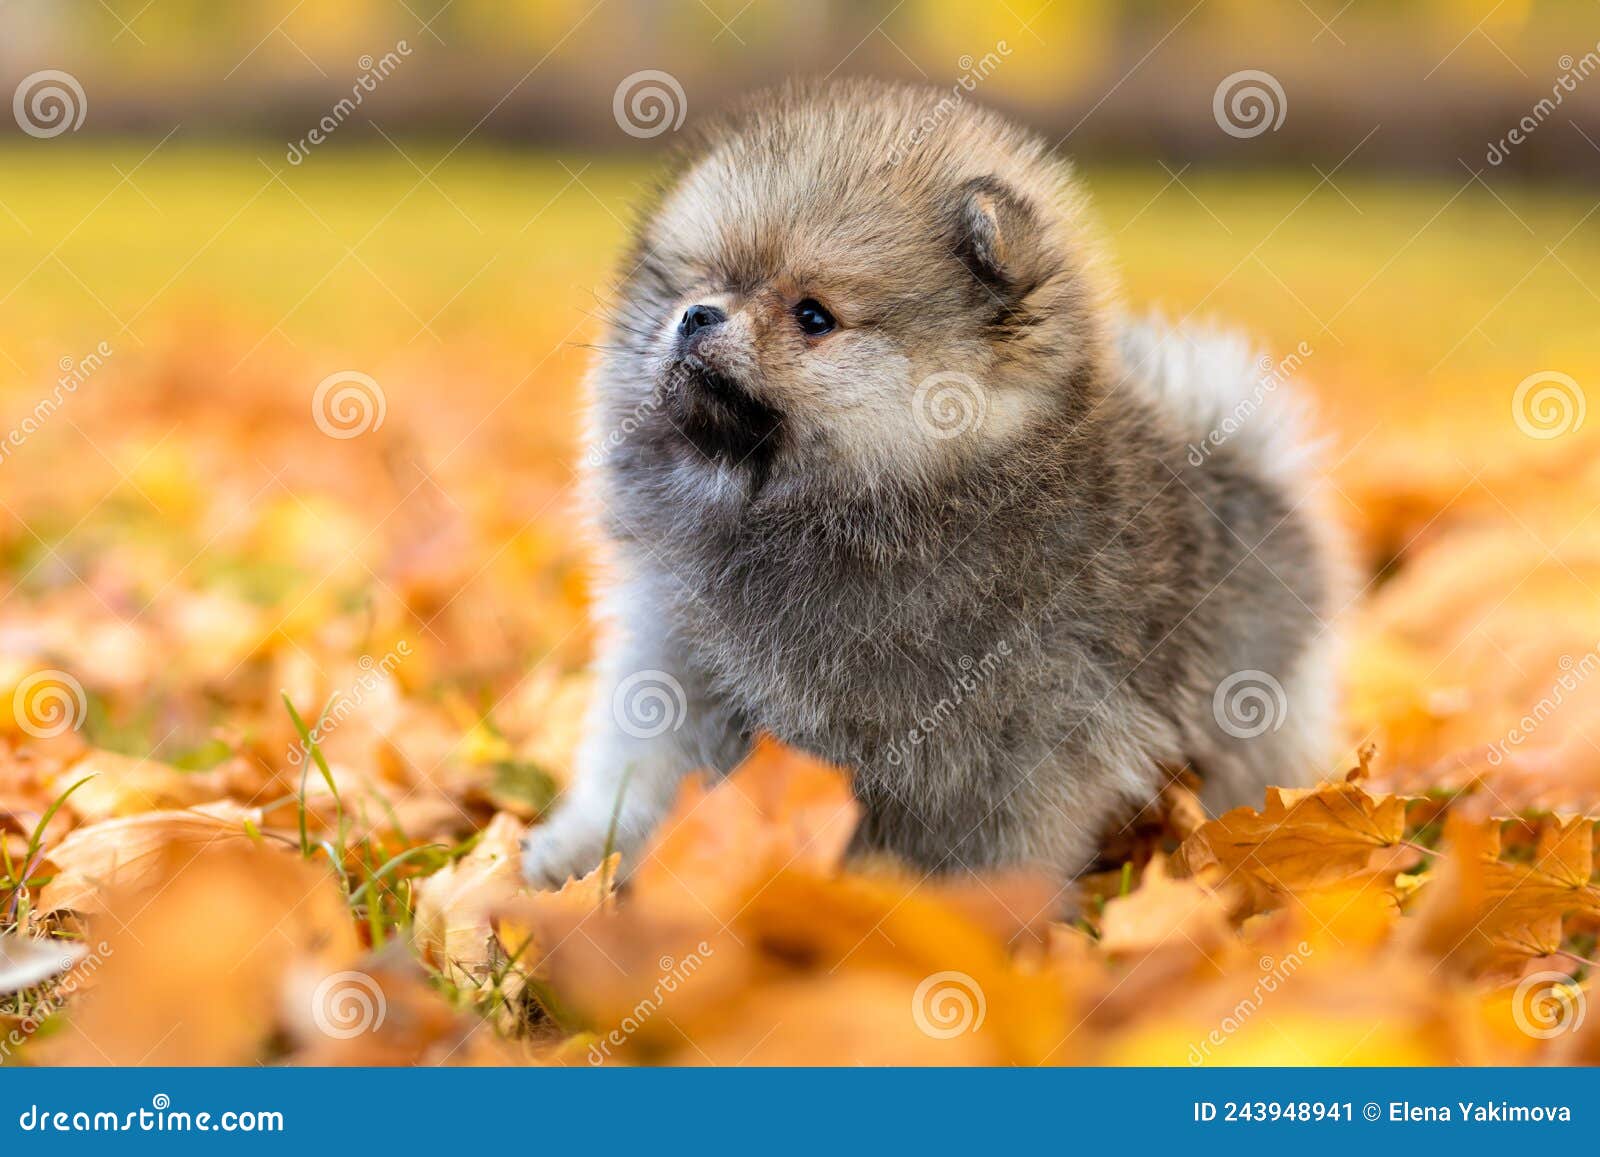 small grey pomeranian spitz puppy, sable color